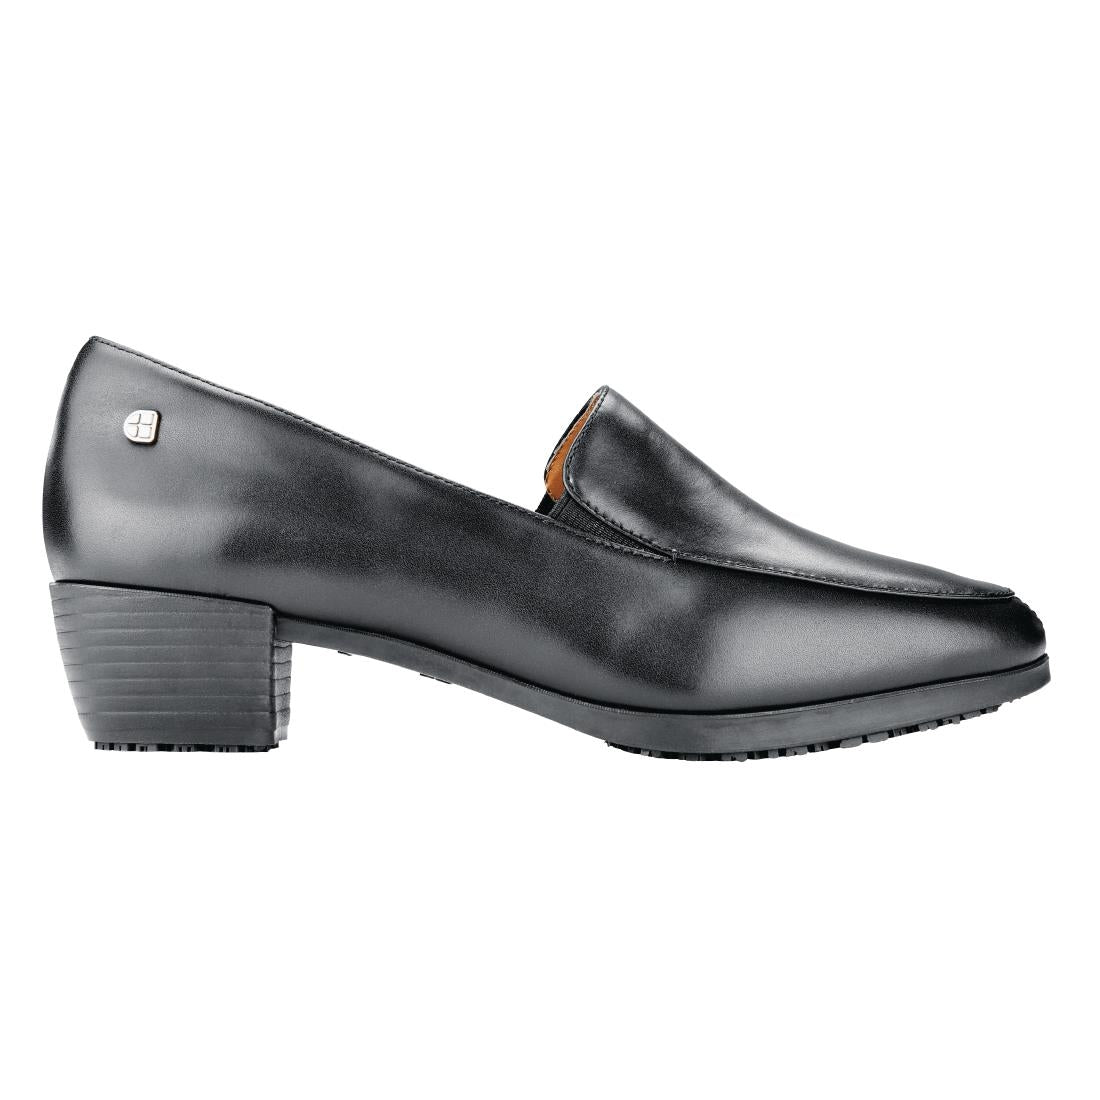 BB605-36 Shoes for Crews Envy Slip On Dress Shoe Black Size 36